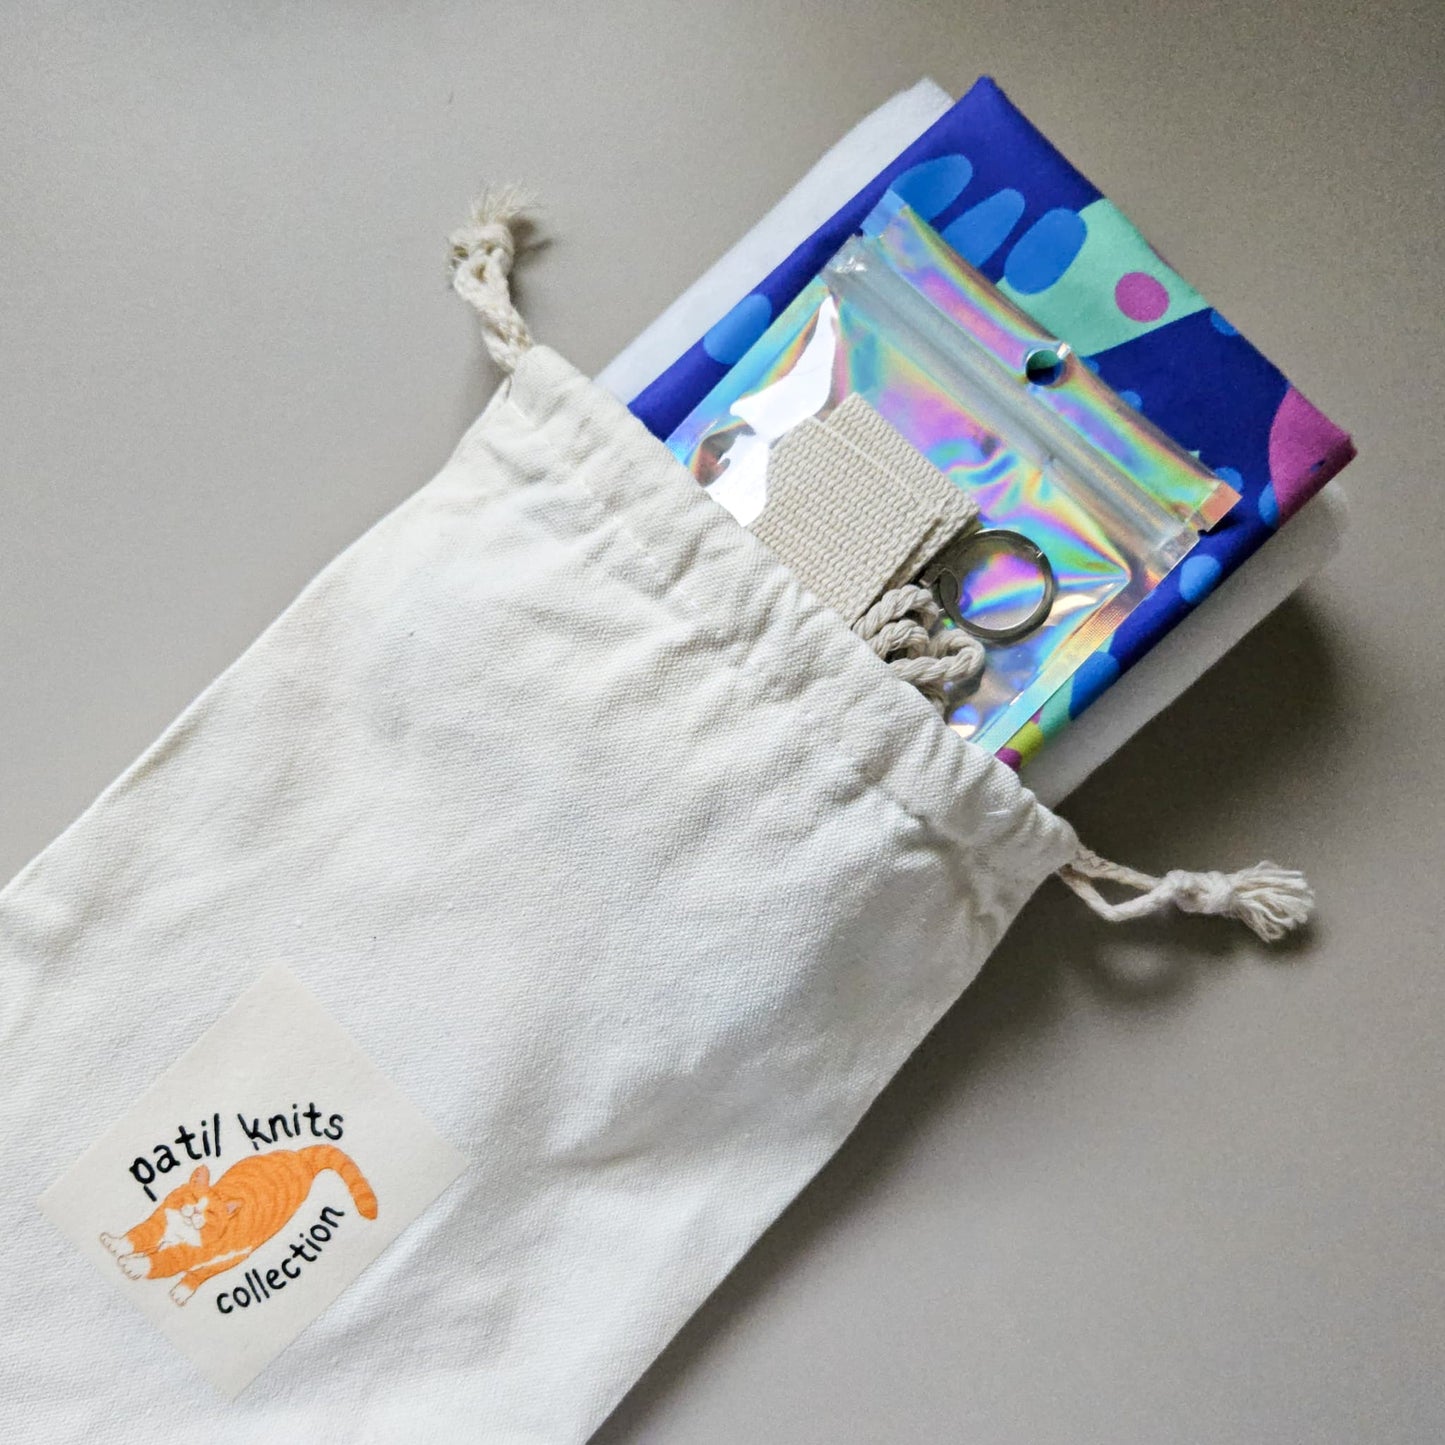 Patil Knits Marshmallow Bag Sewing Pattern Kit - Whiskers